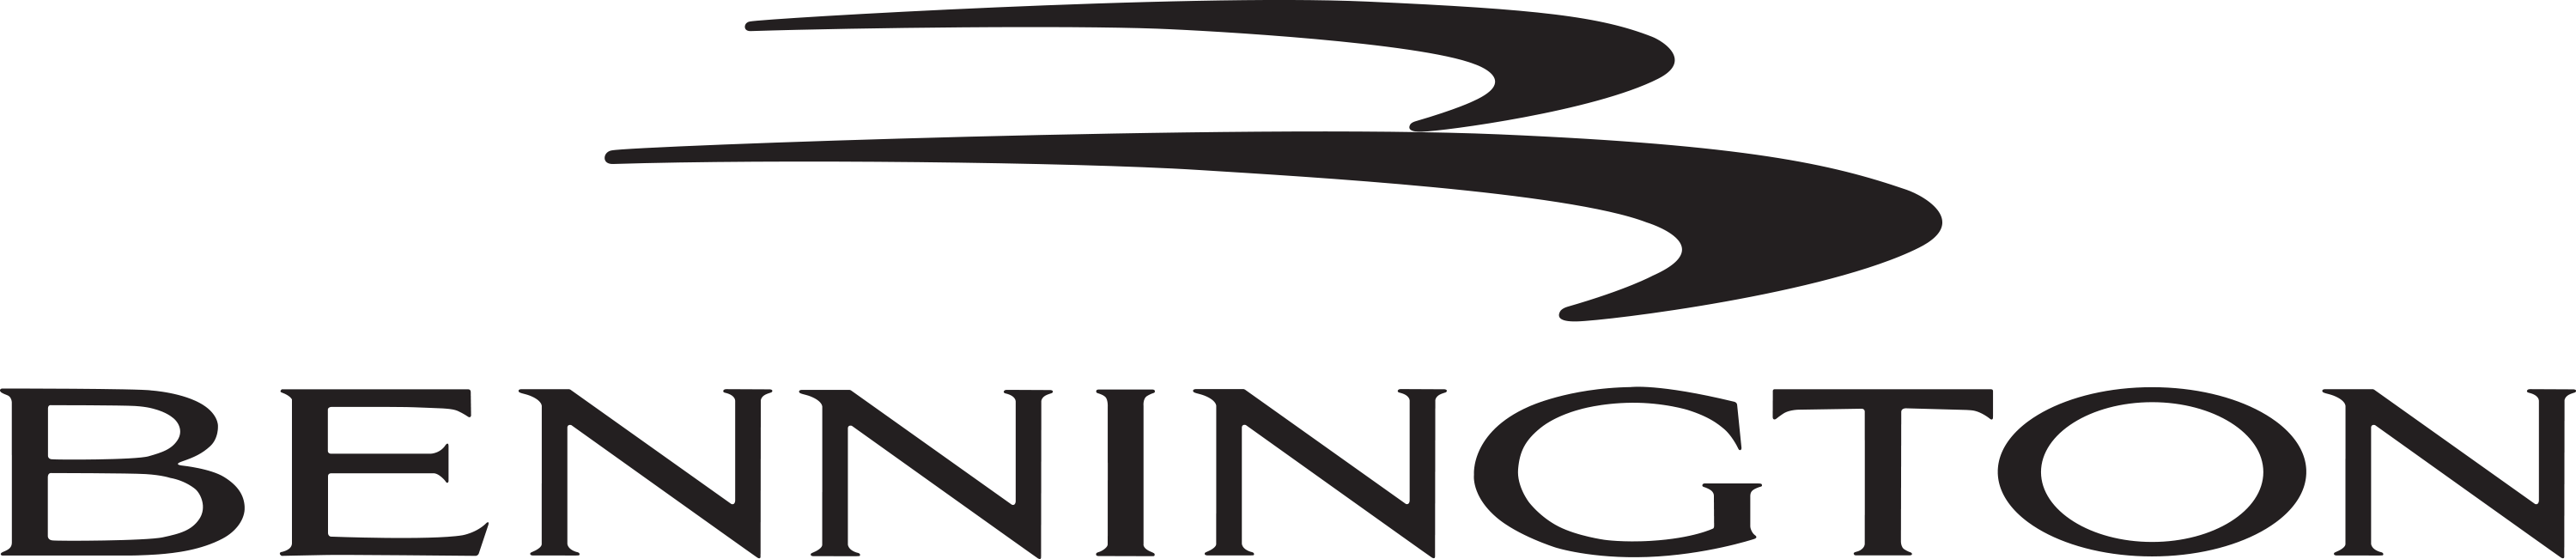 Bennington logo